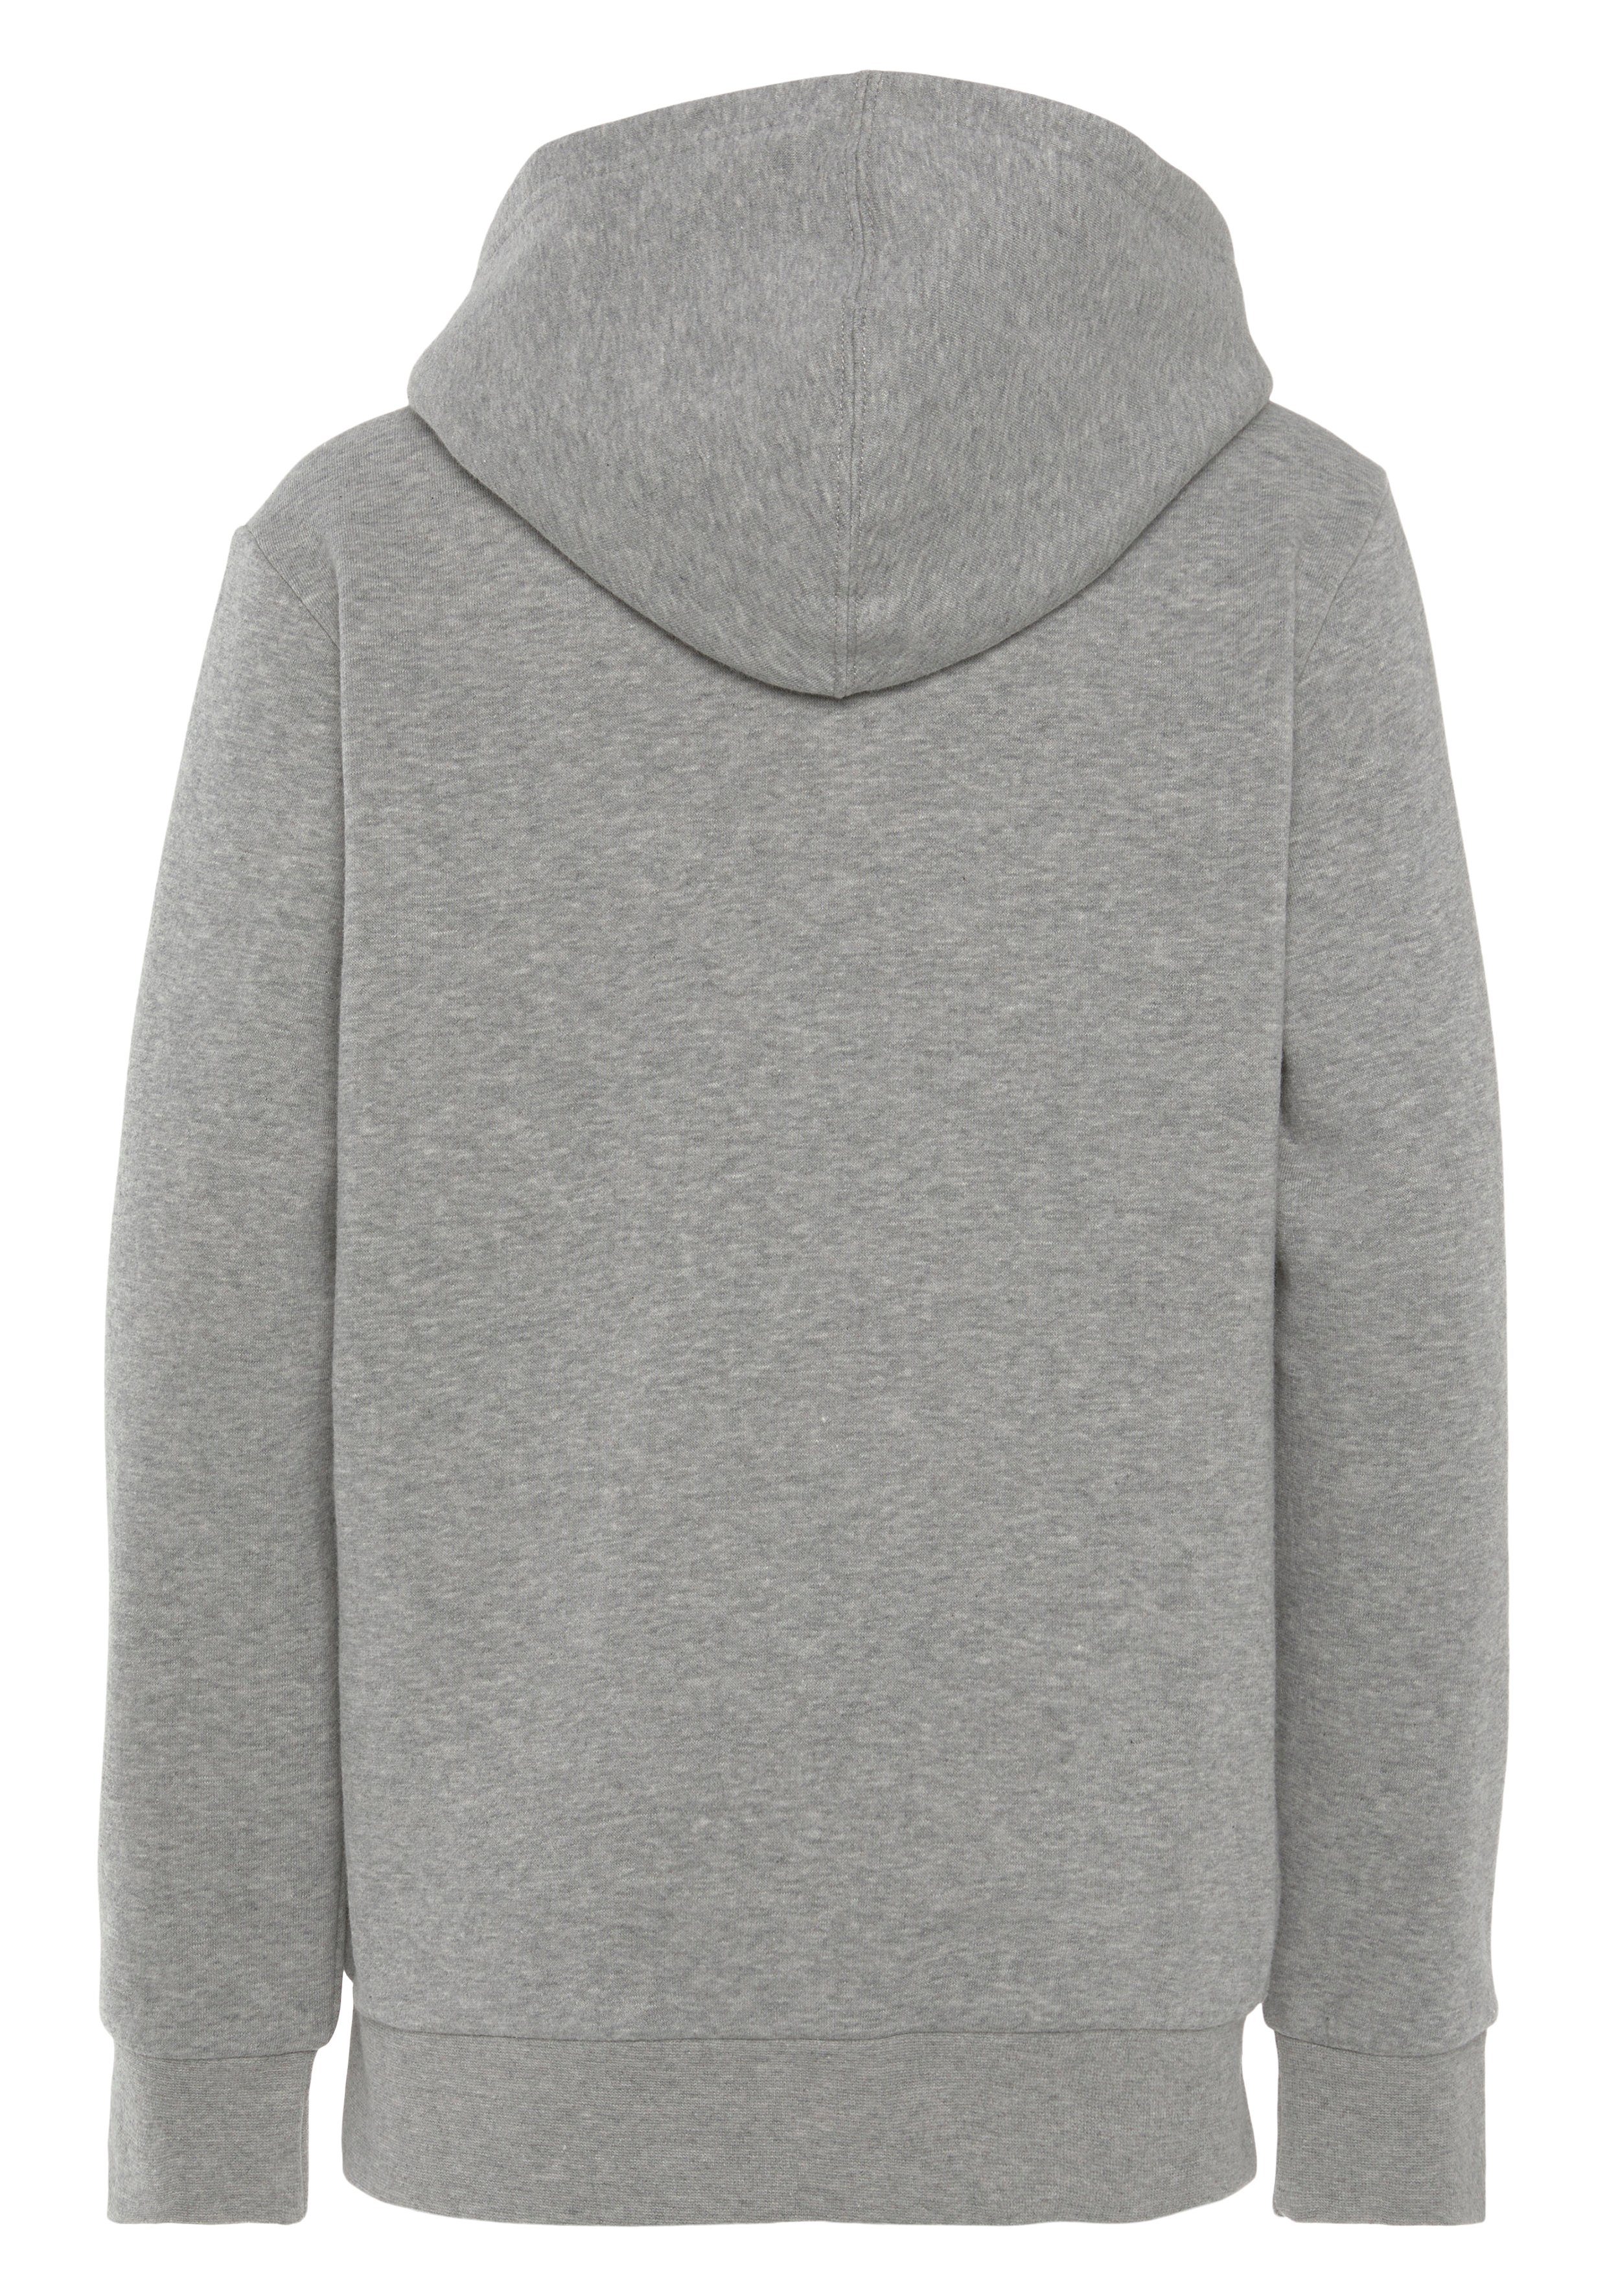 Basic Kinder grau für - Sweatshirt Champion Hooded Sweatshirt